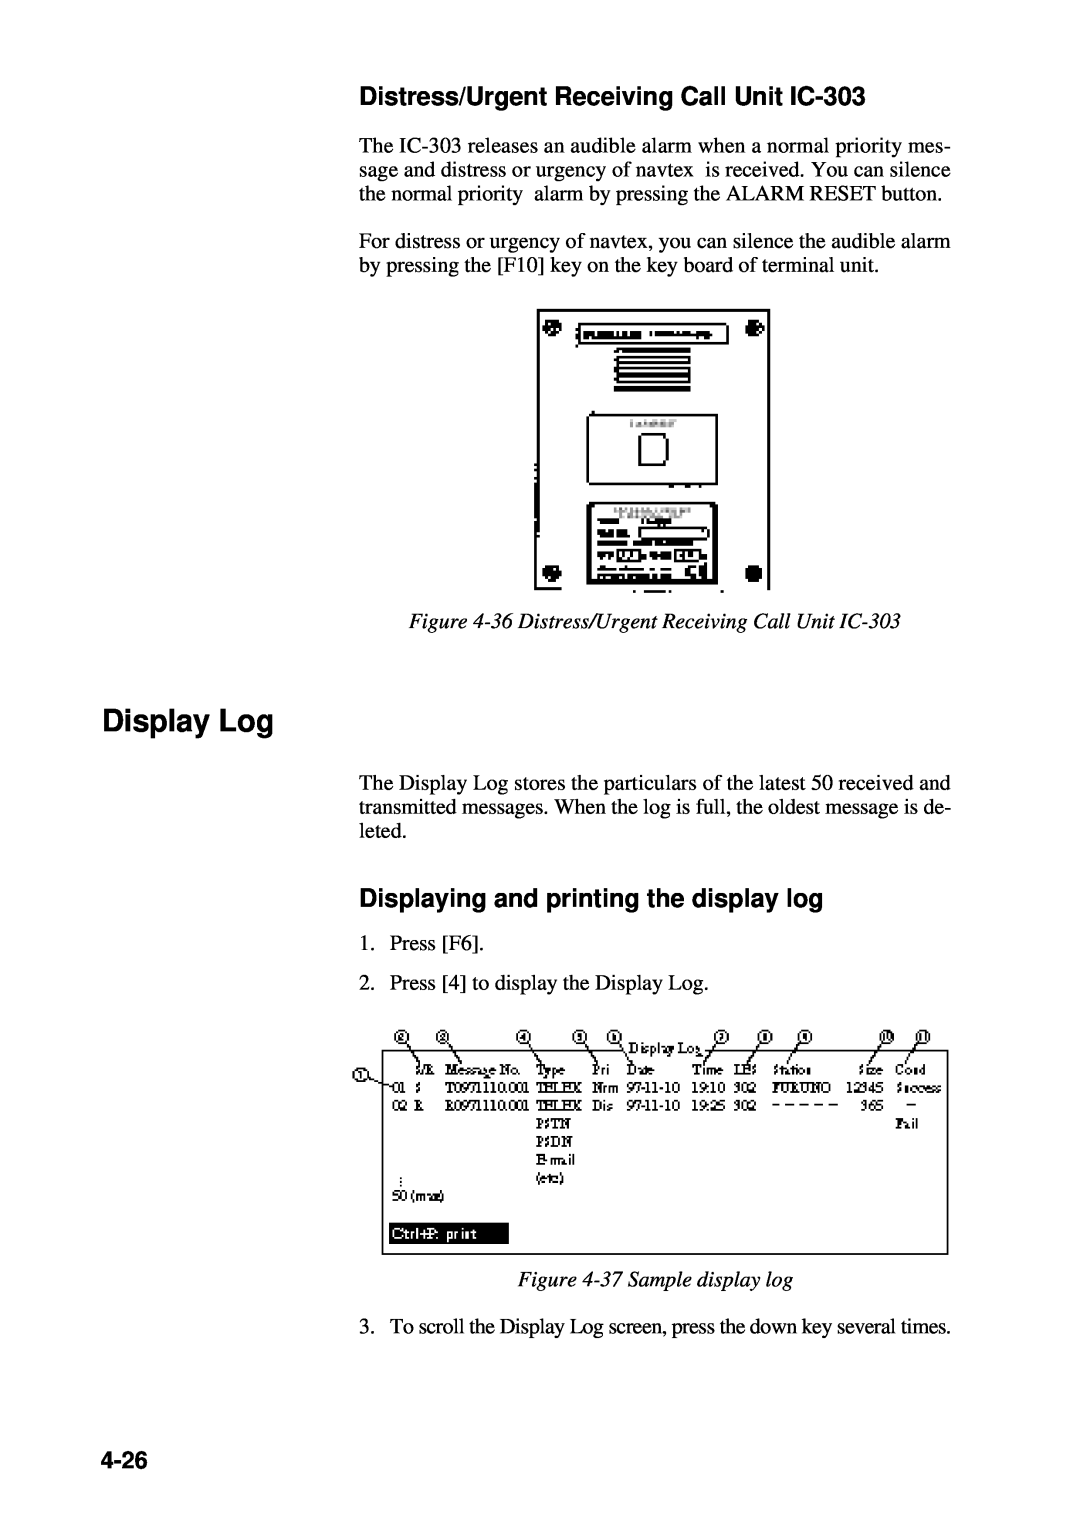 Furuno RC-1500-1T Display Log, Distress/Urgent Receiving Call Unit IC-303, Displaying and printing the display log, 4-26 